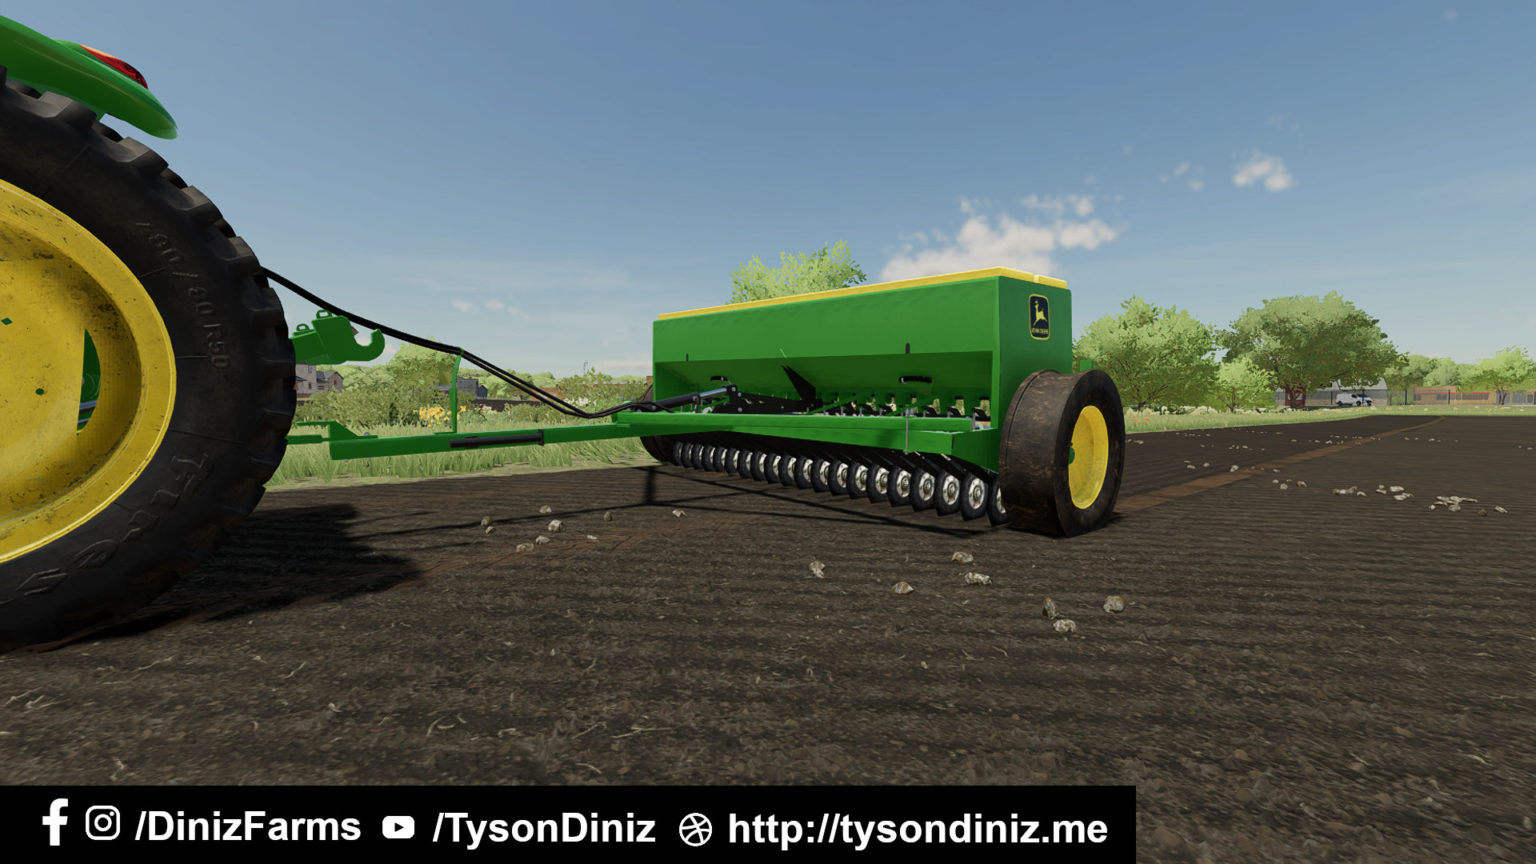 Fs22 Implements Diniz Farms Farming Simulator Modding 5969